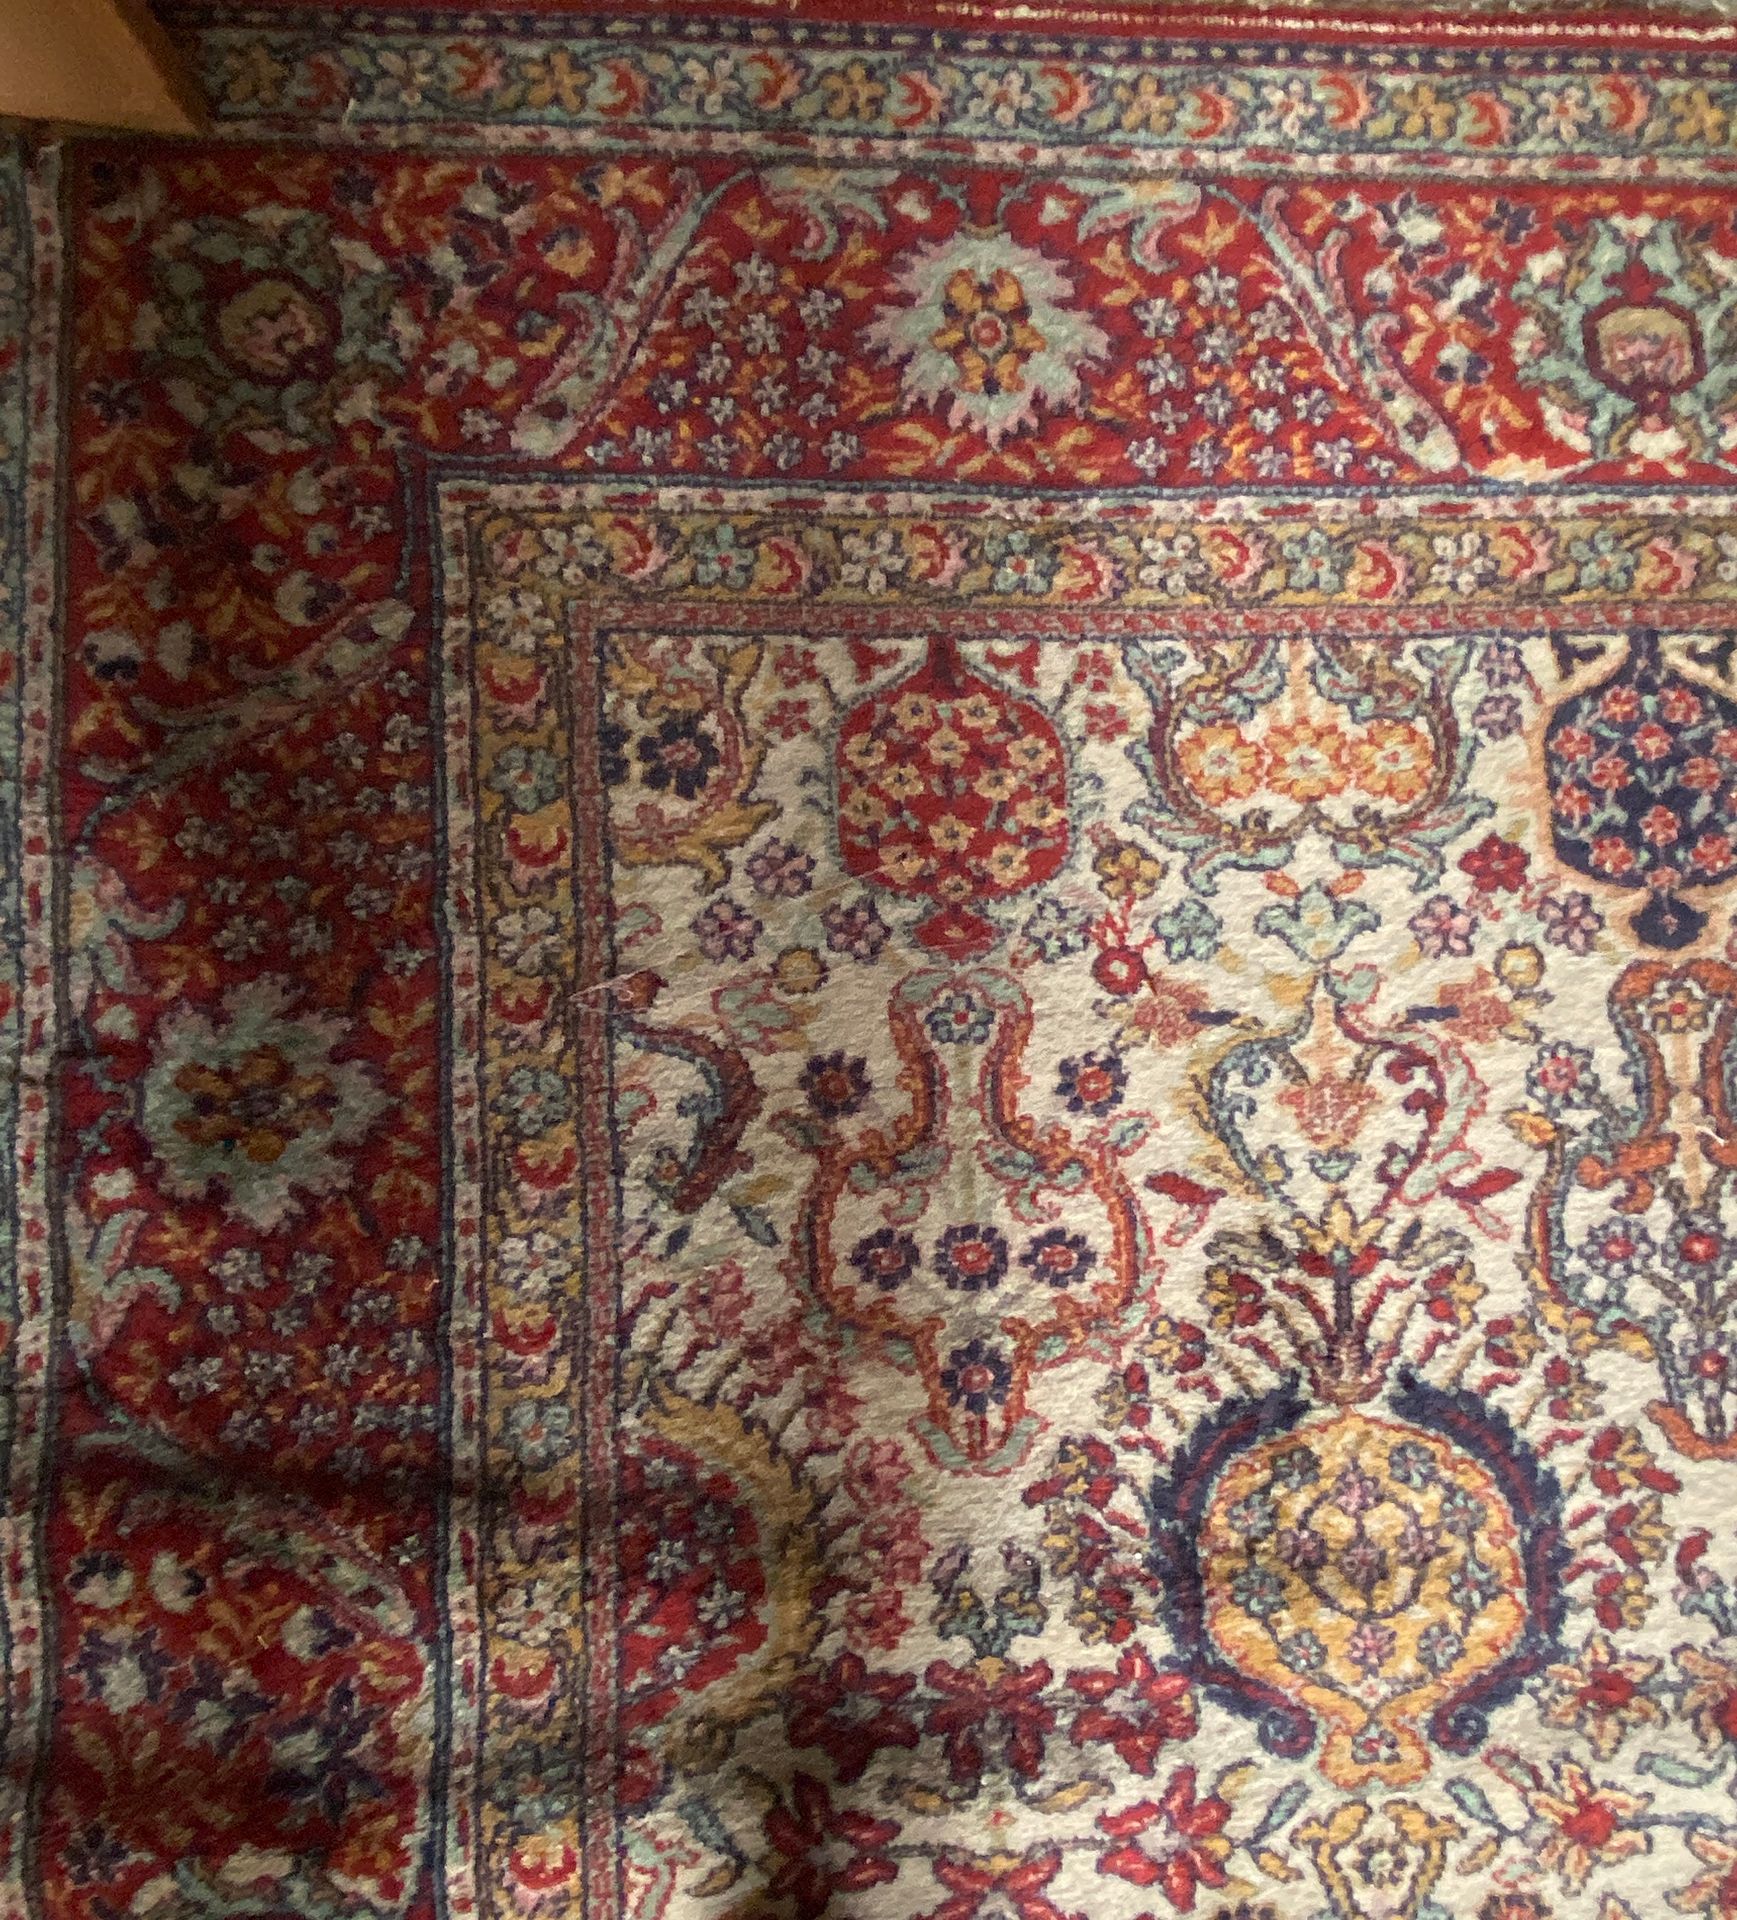 Null Oriental carpets

(sale January 20, 2022)